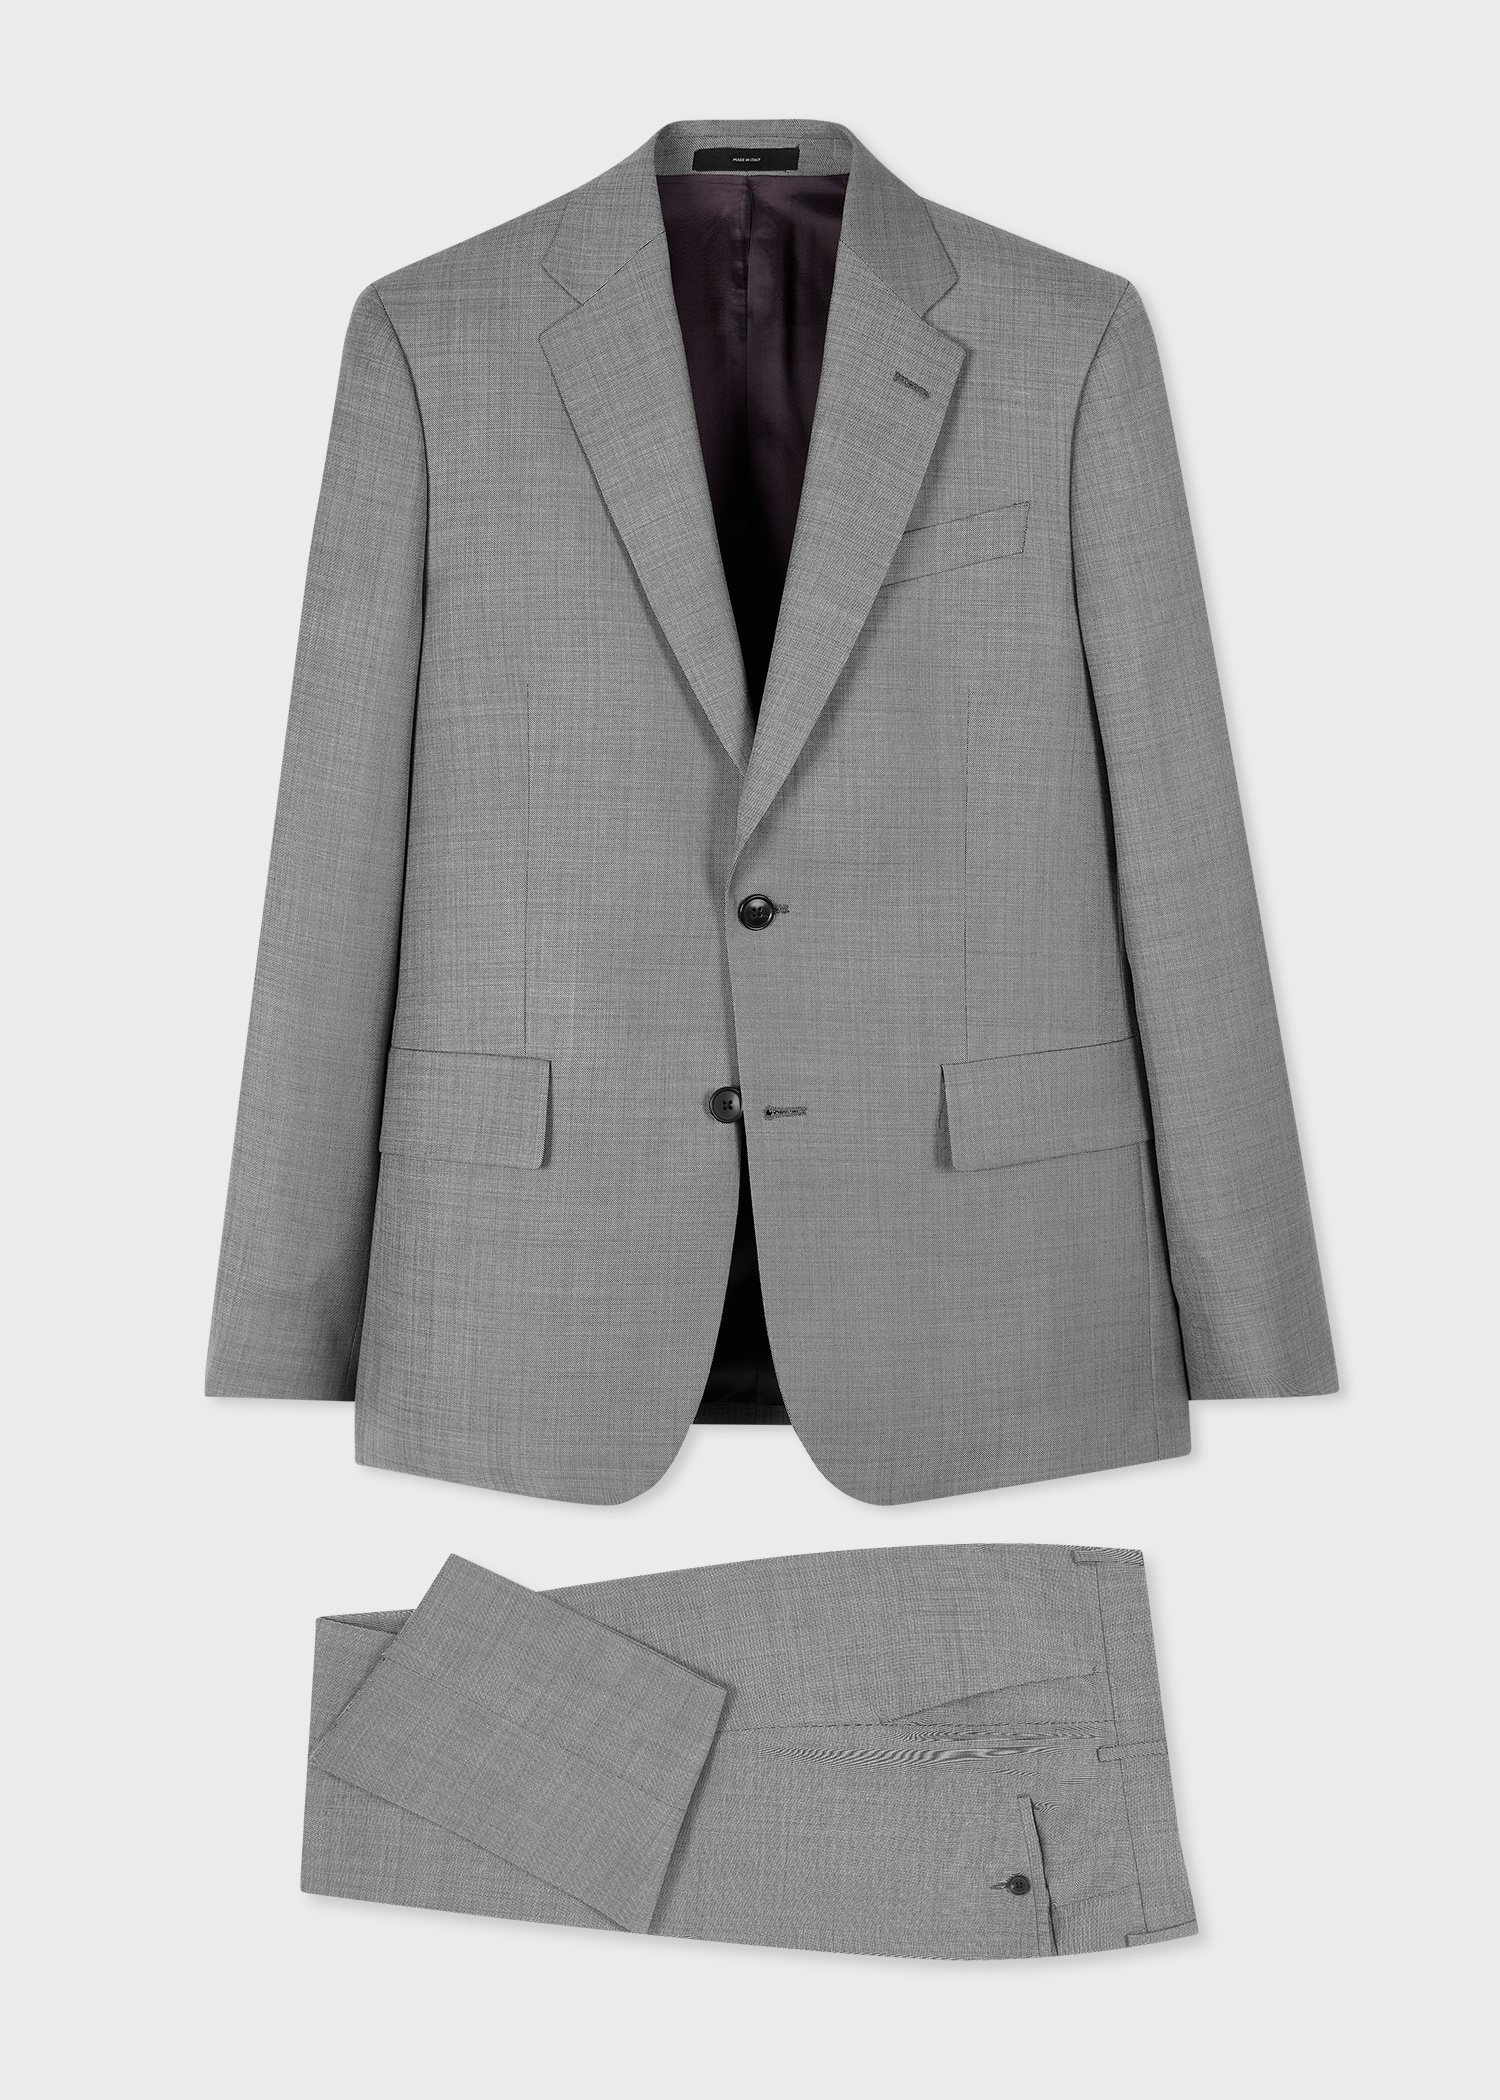 The Brierley - Light Grey Sharkskin Wool Suit - 1